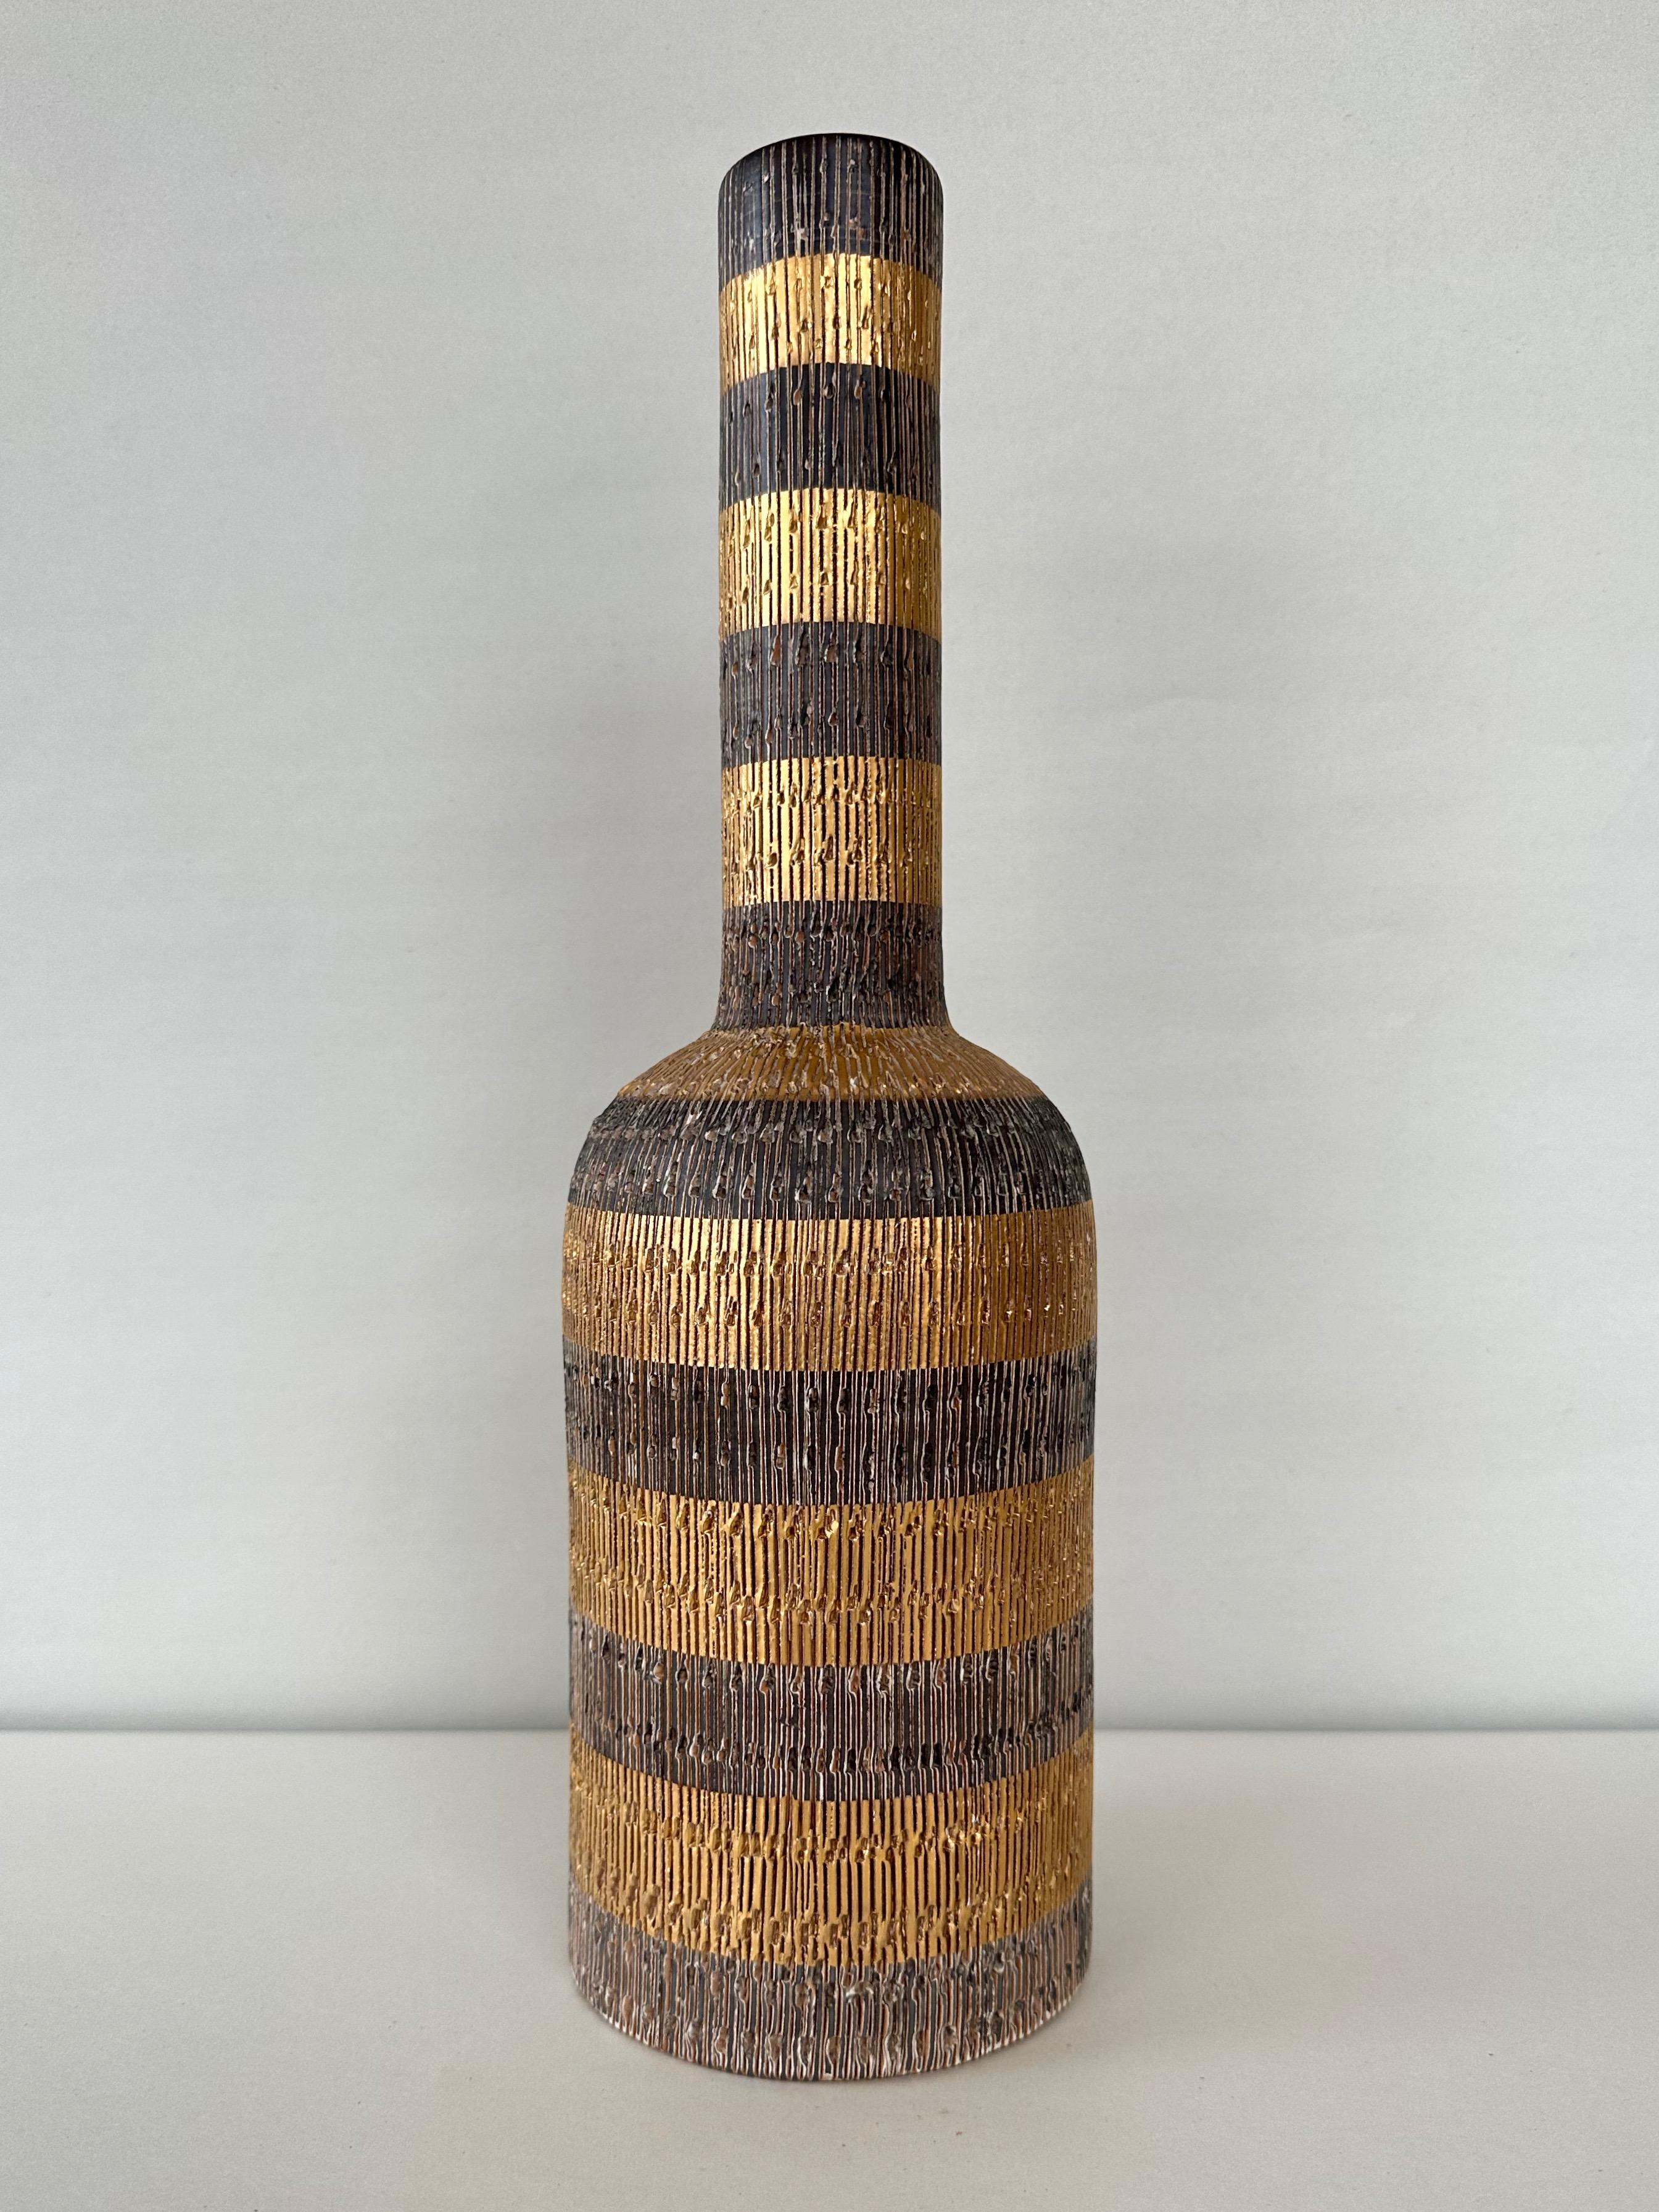 Aldo Londi for Bitossi via Raymor Seta Glazed Incised Pottery Bottle Vase, 1950s 7